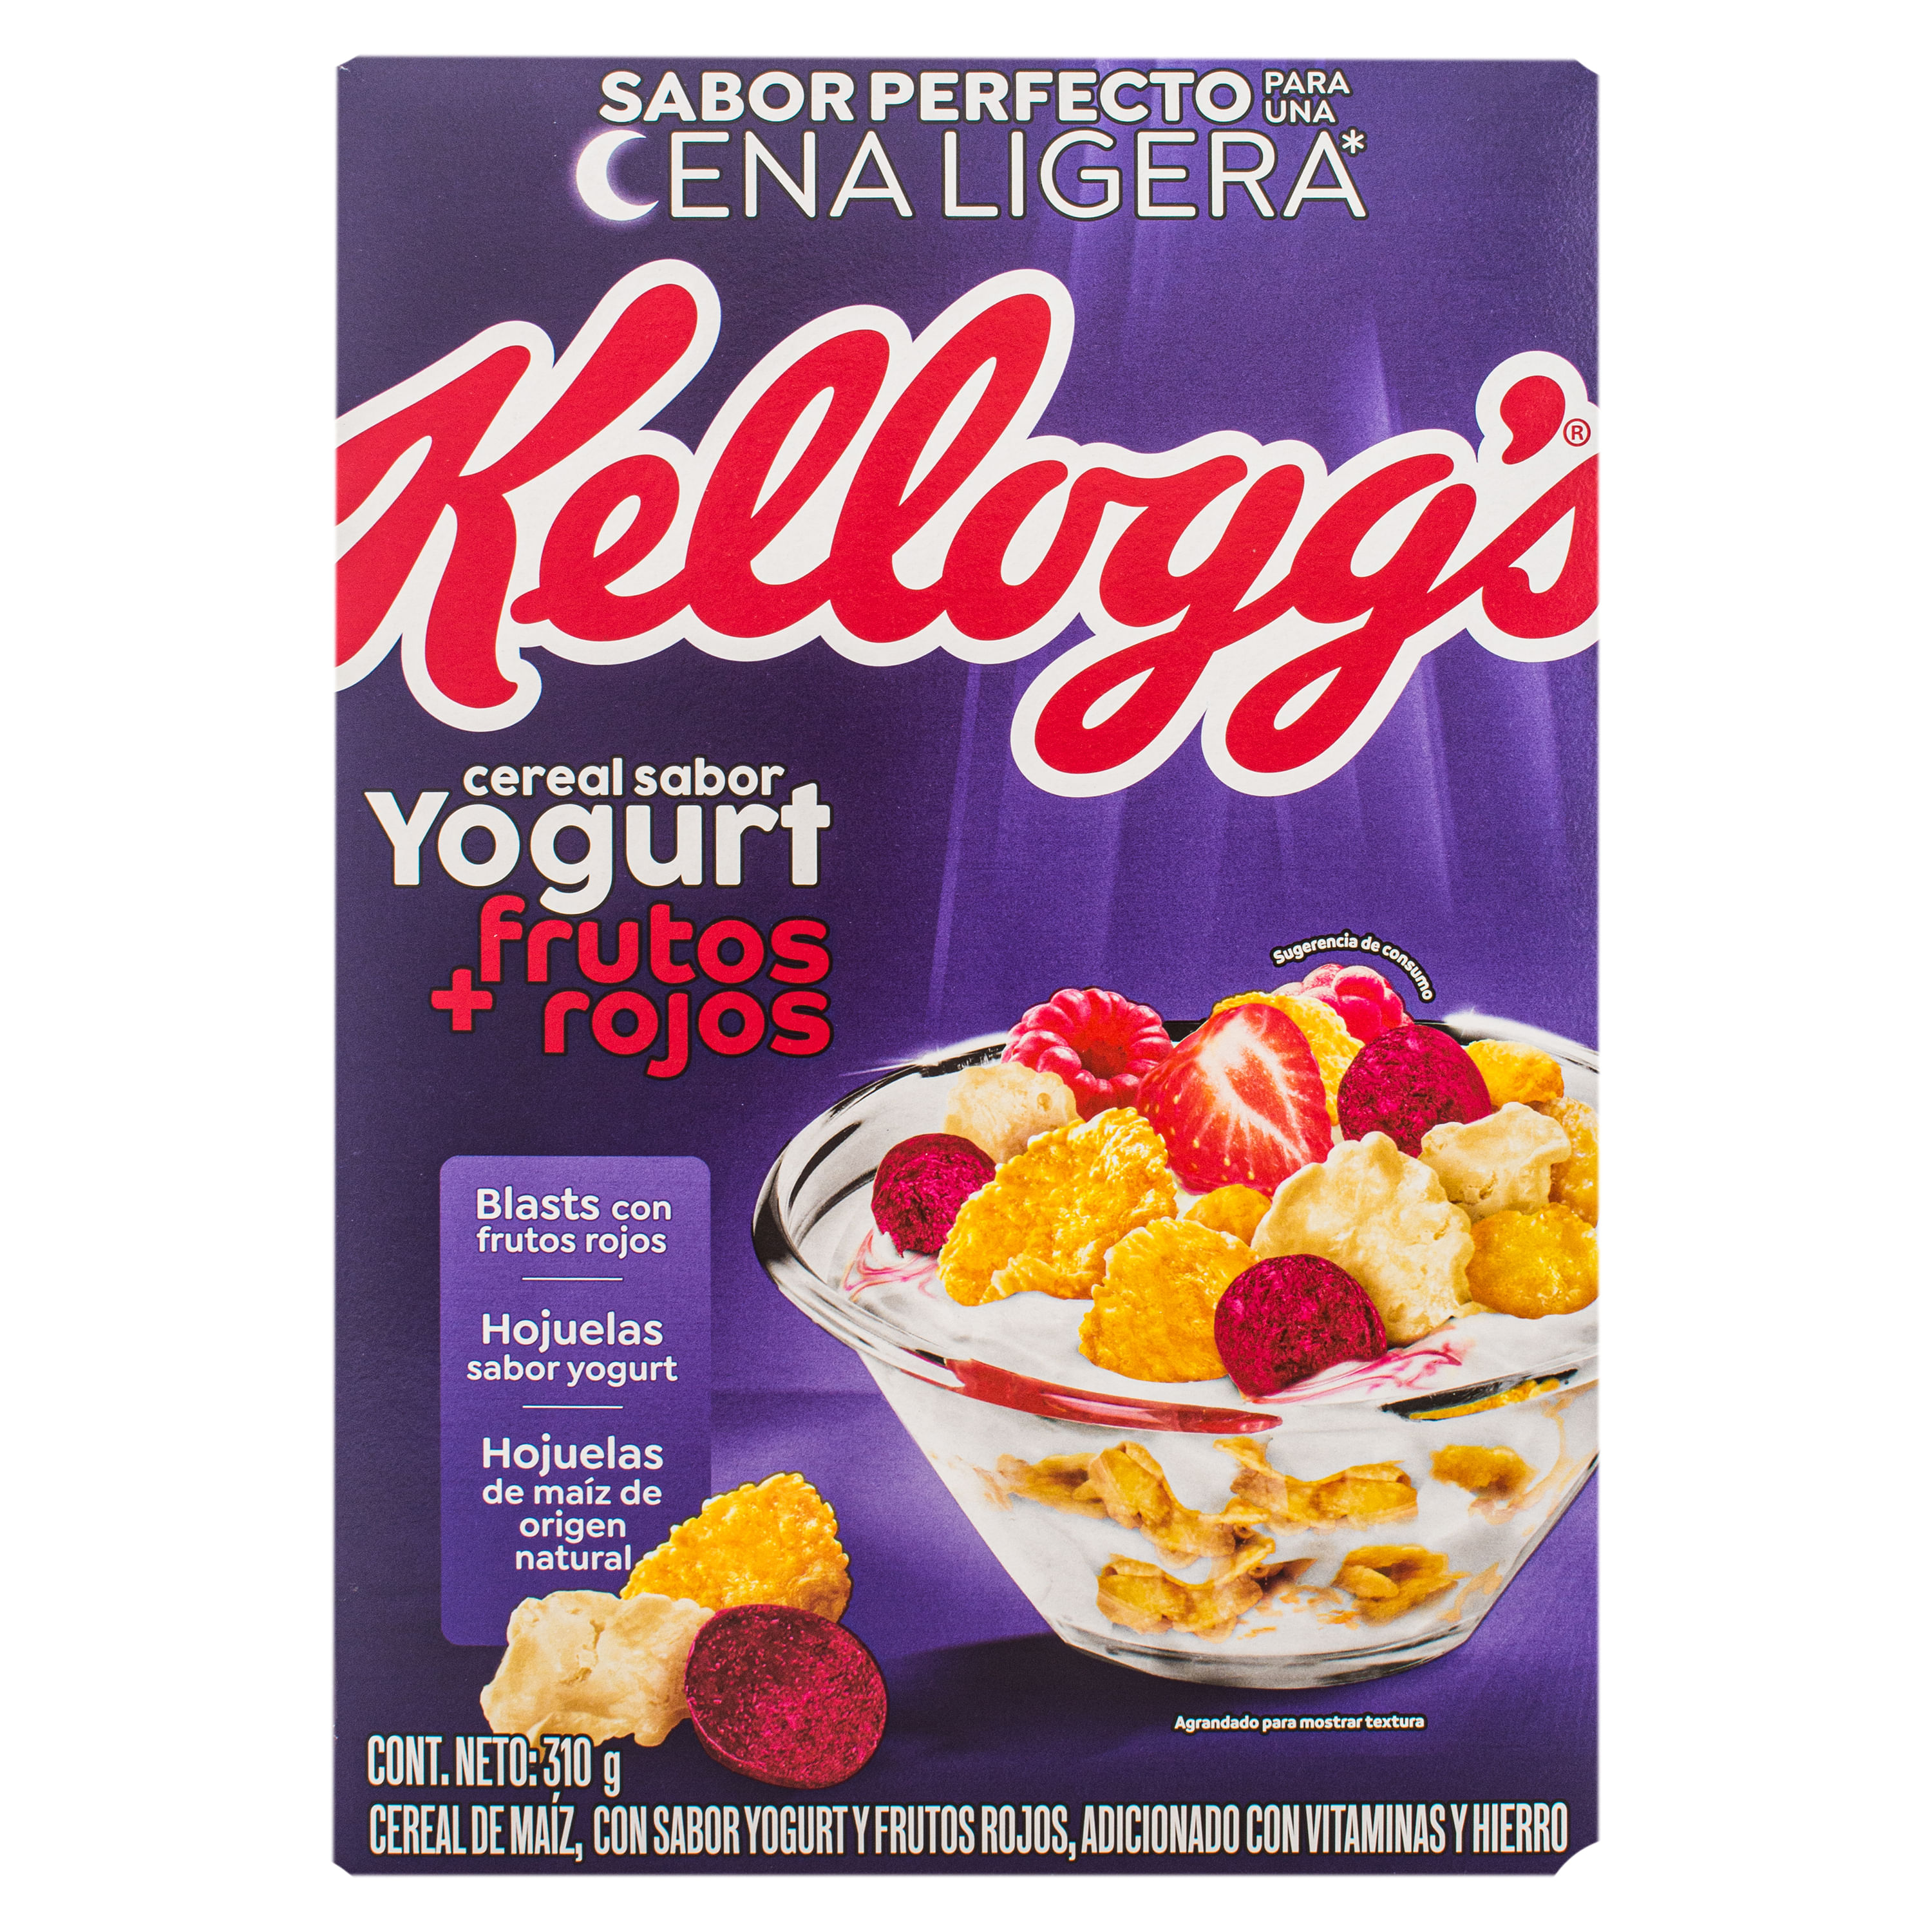 Comprar Cereal Kellogg's® Special K® Antoxidantes Cosecha Roja de